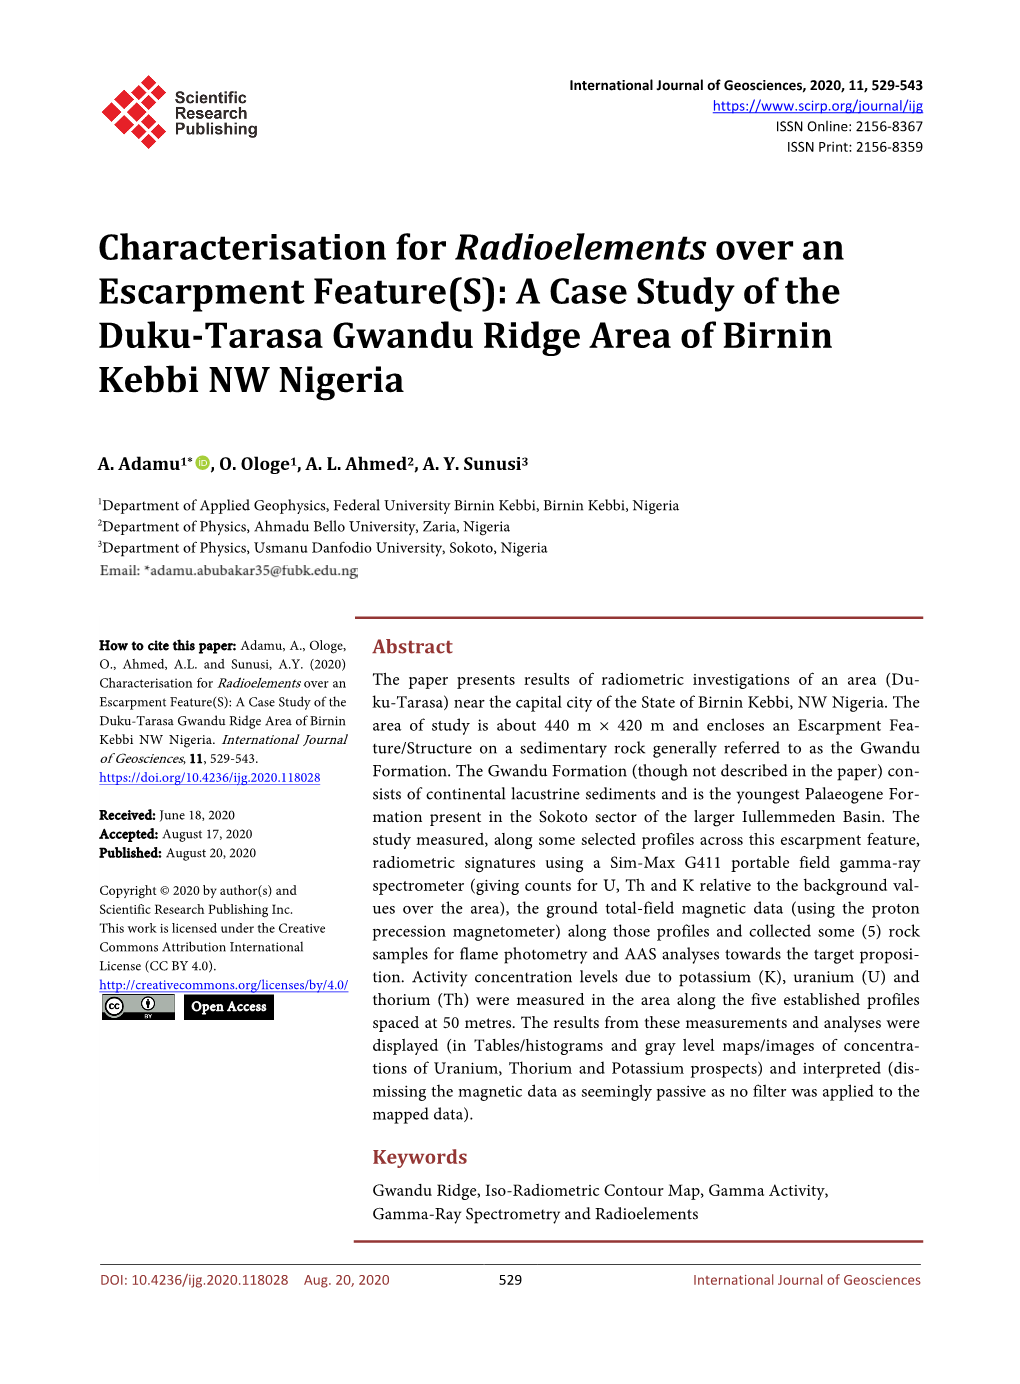 A Case Study of the Duku-Tarasa Gwandu Ridge Area of Birnin Kebbi NW Nigeria